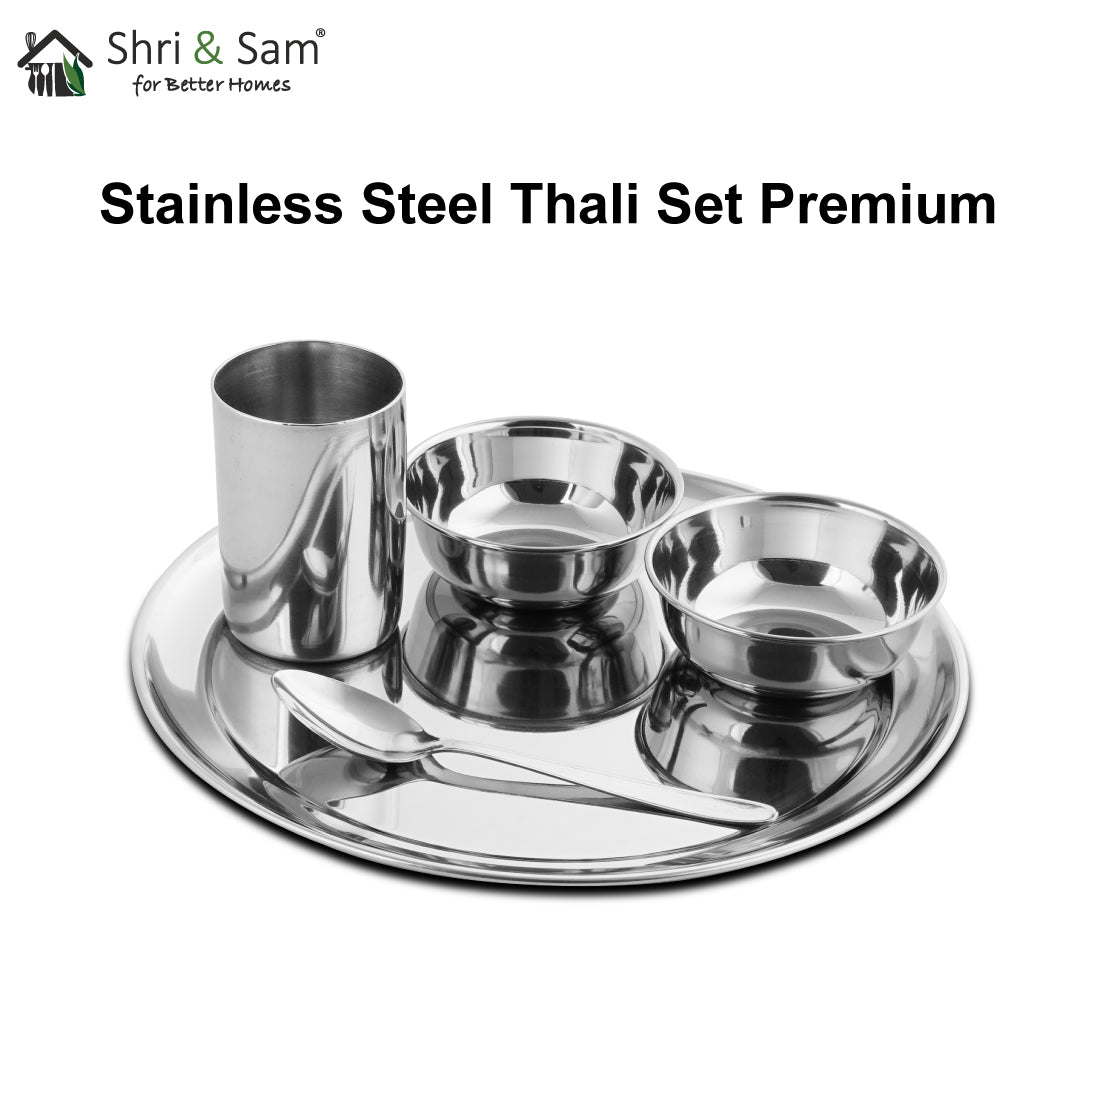 Stainless Steel Thali Set Premium